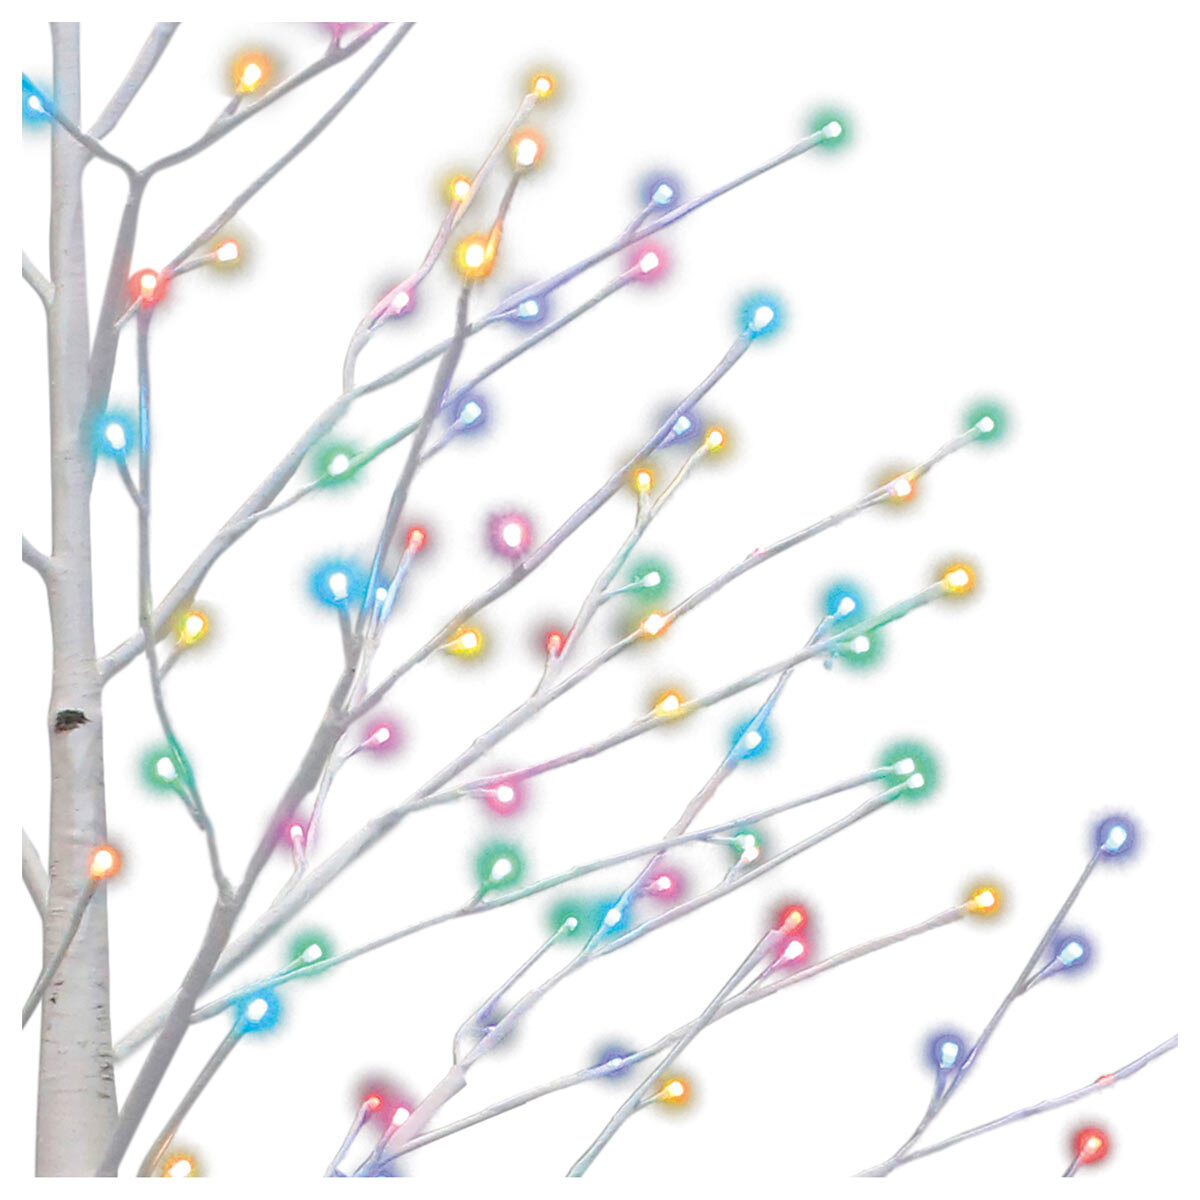 Buy Colour Select LED Birch Tree Multi-Colour Image at Costco.co.uk